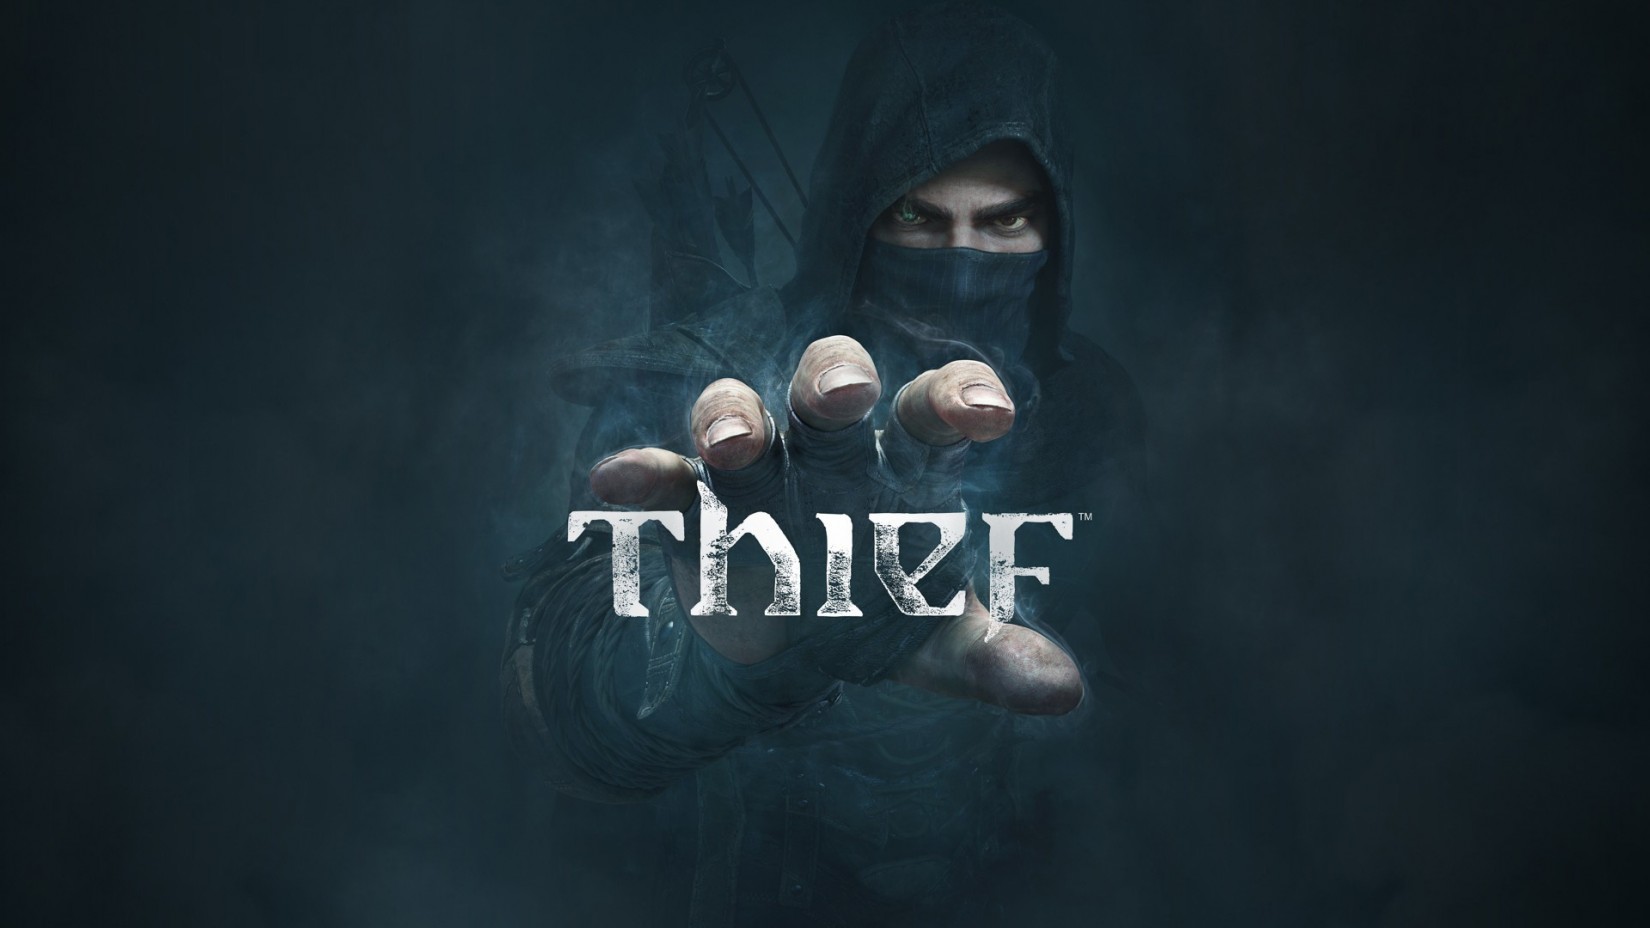 Thief 